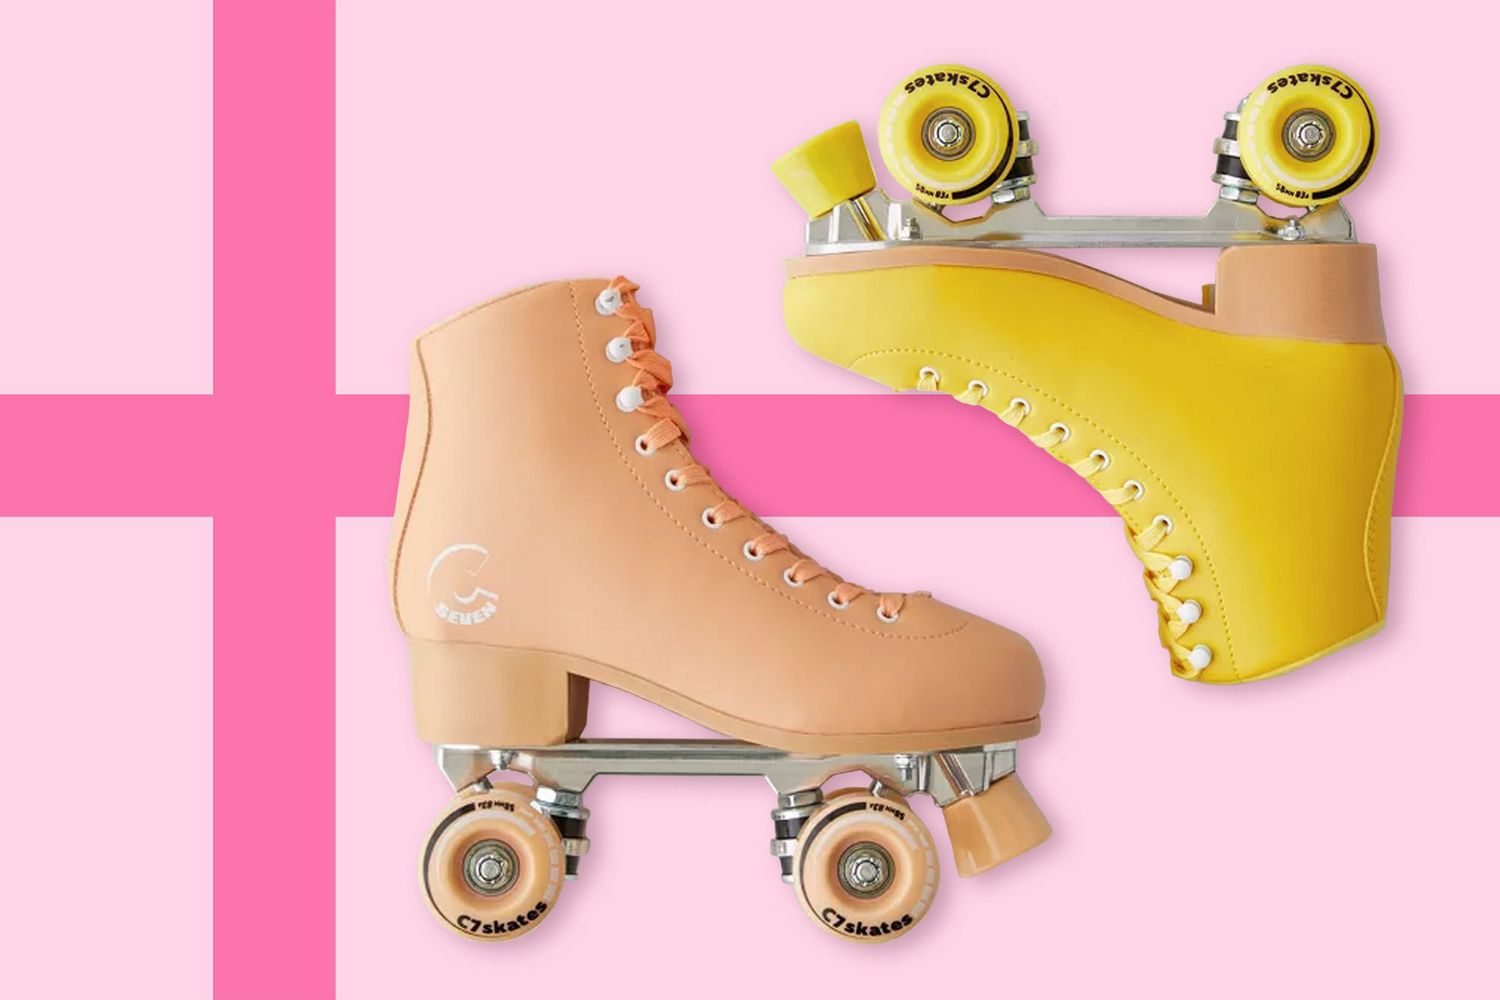 USED Skate Gear Sparkly Glitter Roller Skates for Girls Christmas Gifts 